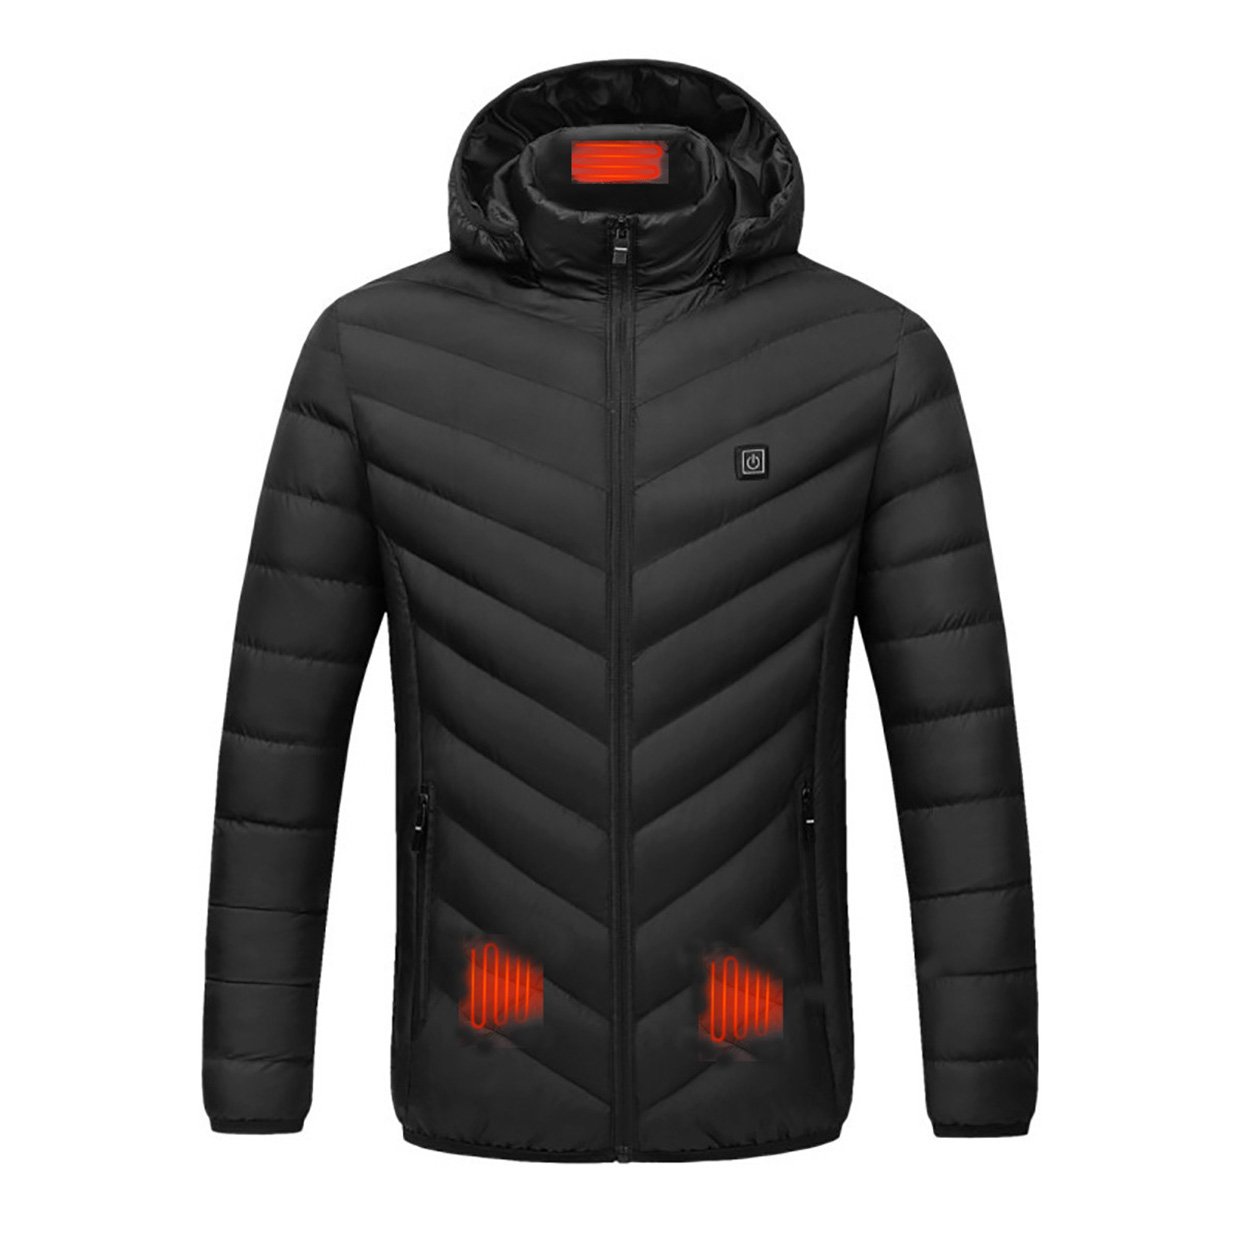 CALDO-X Heated Jacket